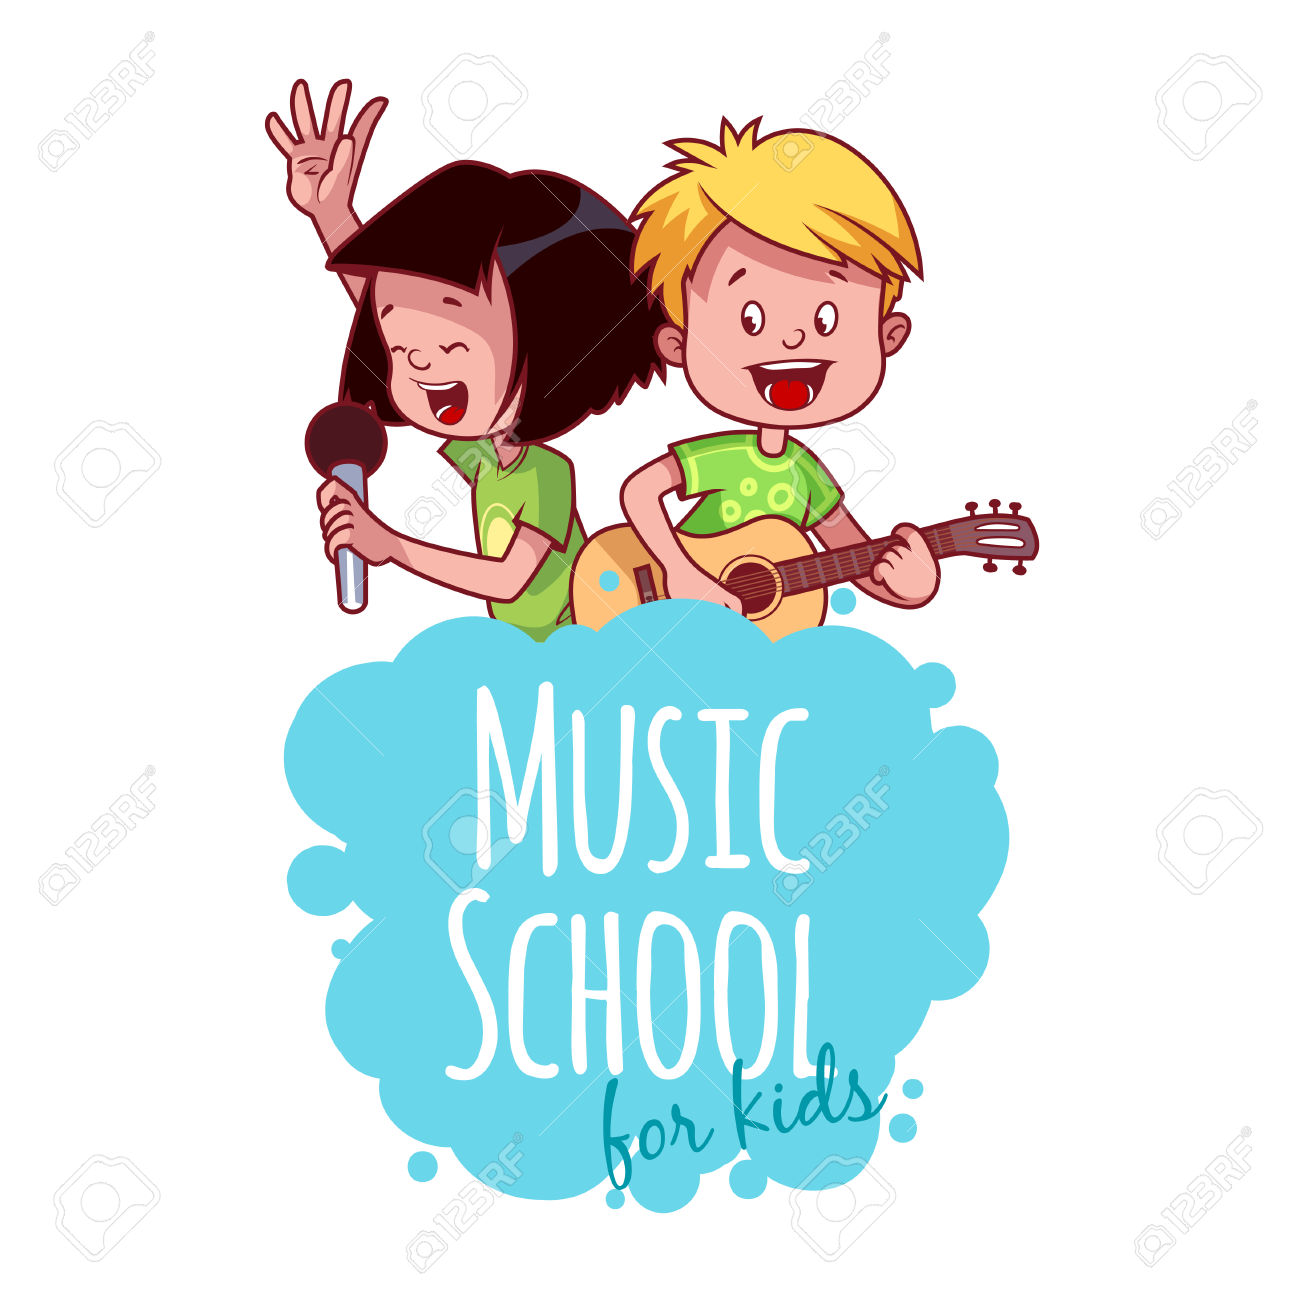 school music clipart - photo #16